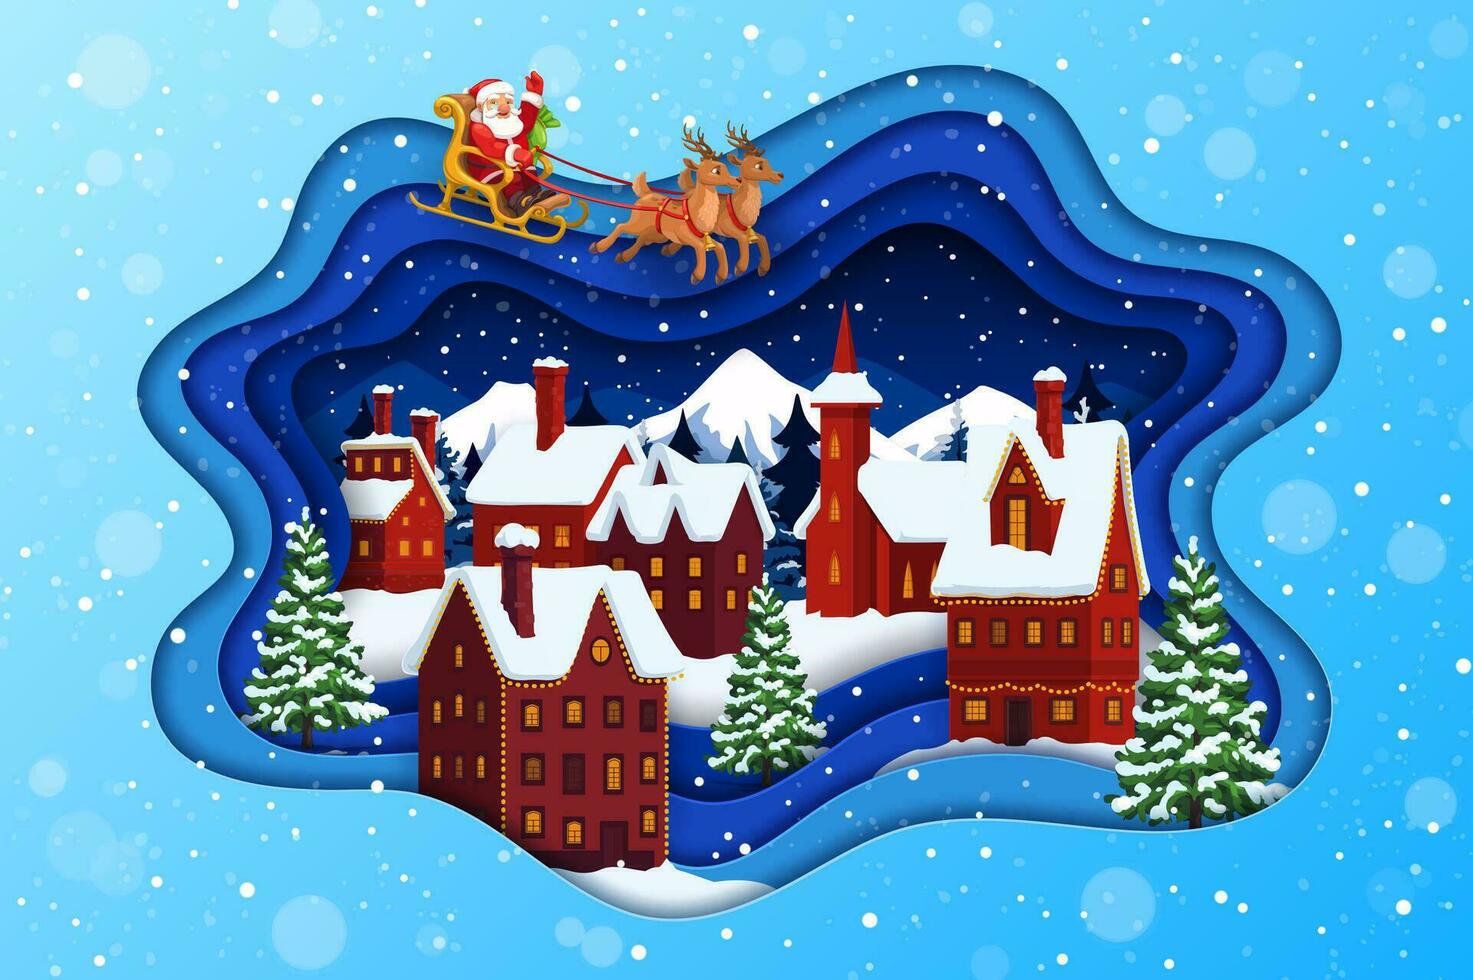 Christmas paper cut Santa on sleigh and snowy town vector